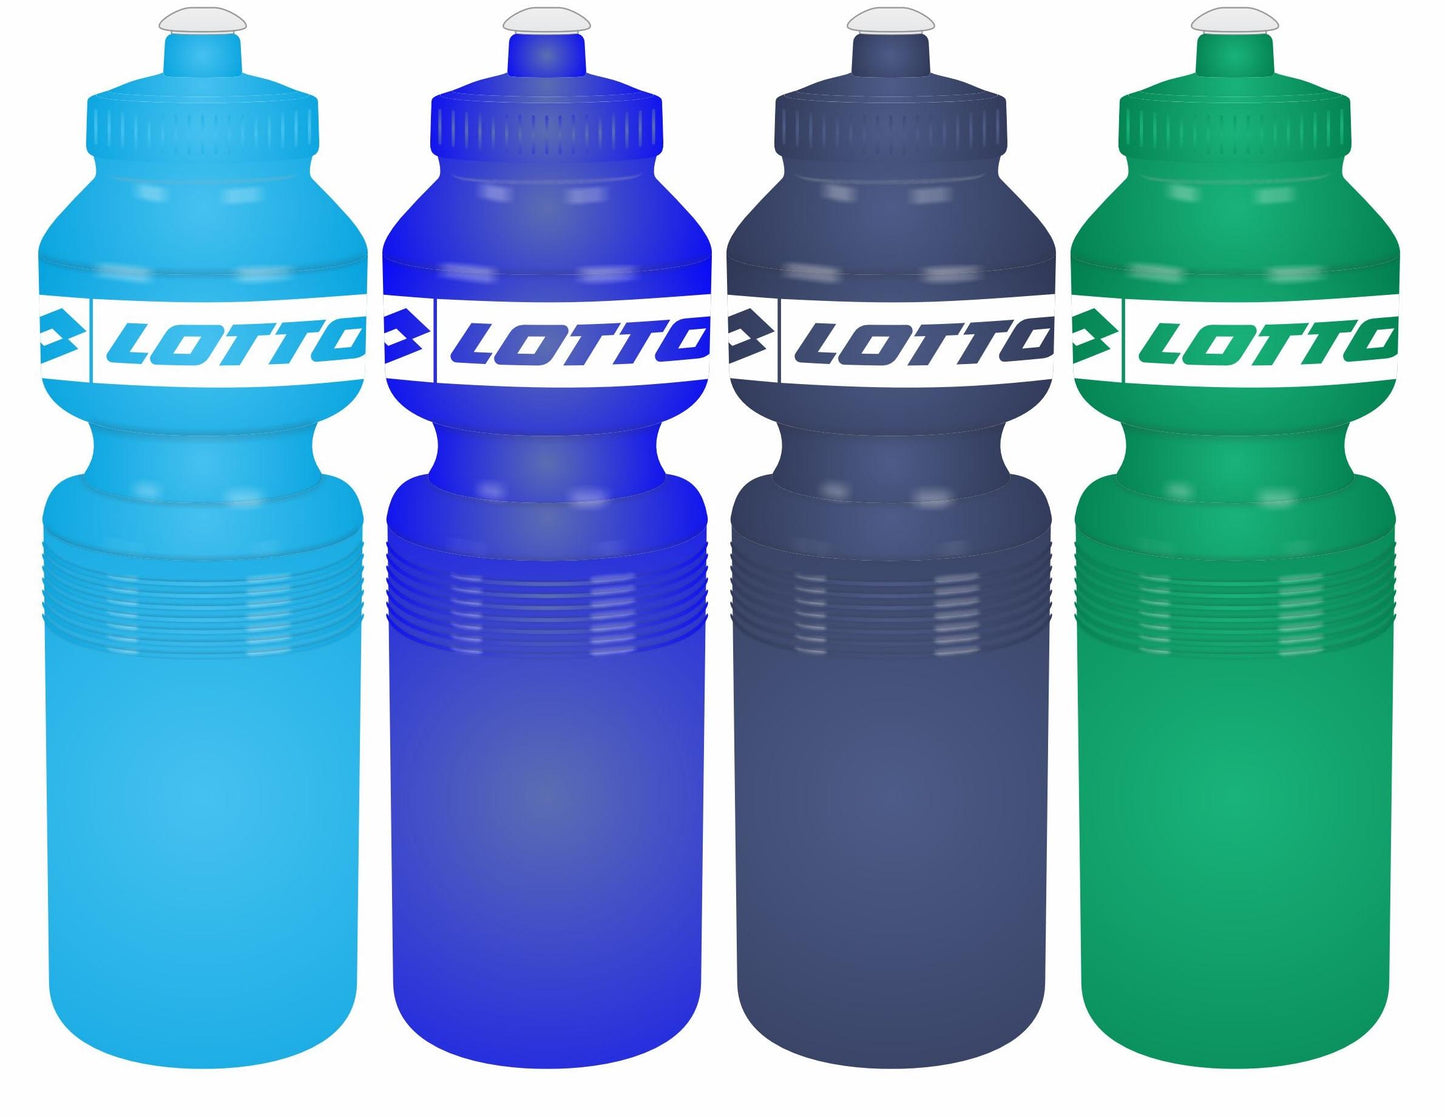 Water Bottles (Lotto) (Plastic)